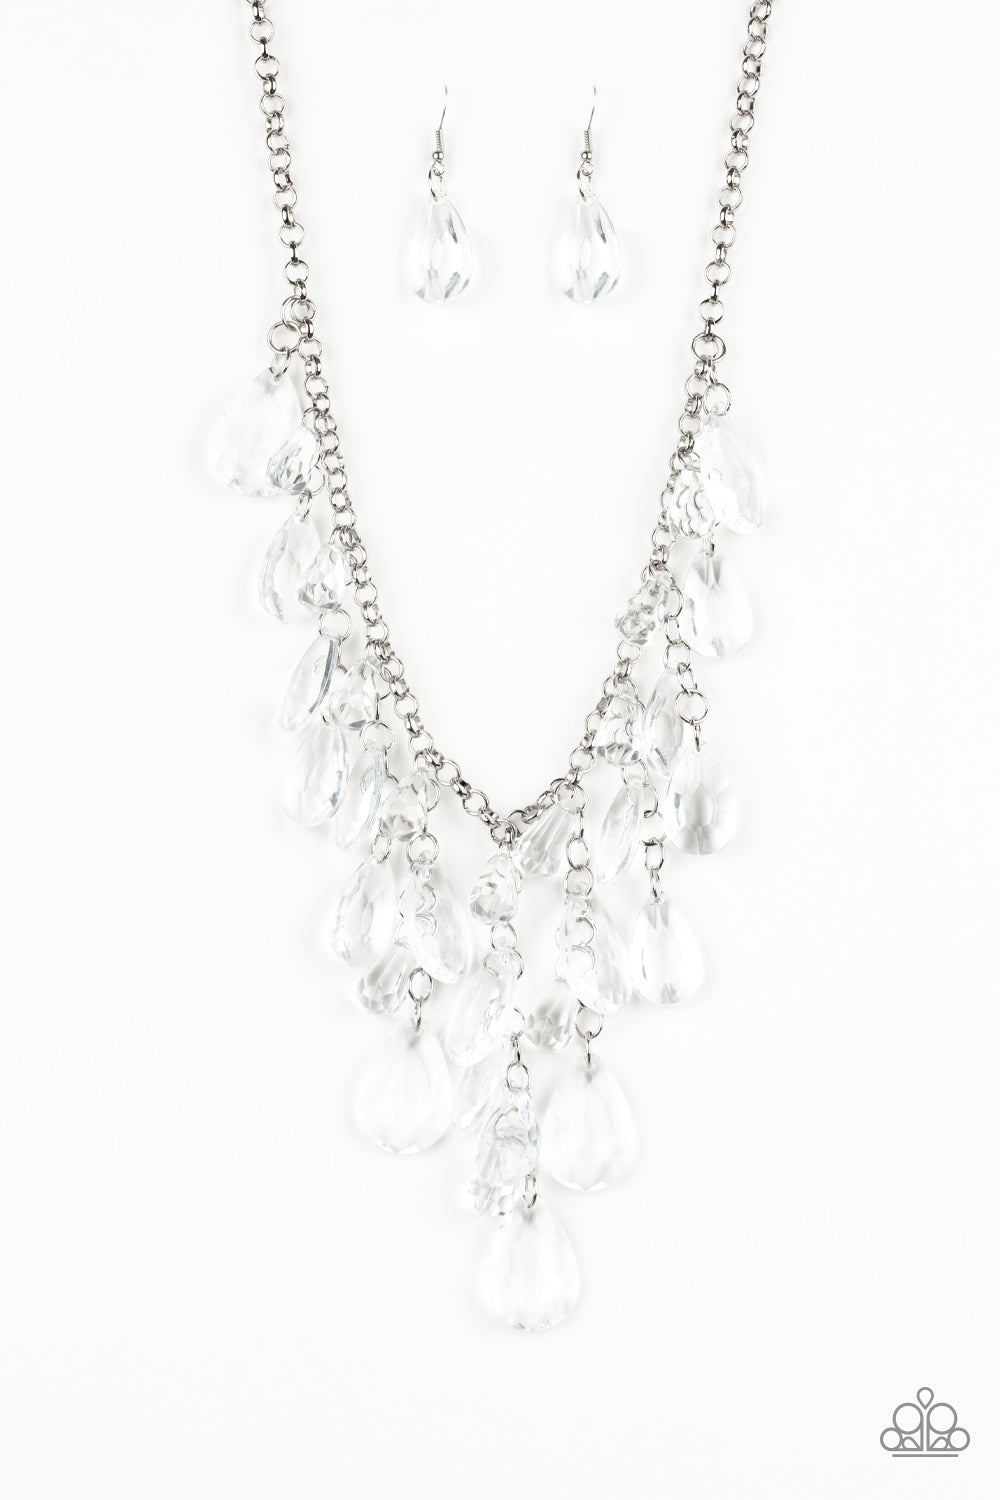 Irresistible Iridescence - White - VJ Bedazzled Jewelry